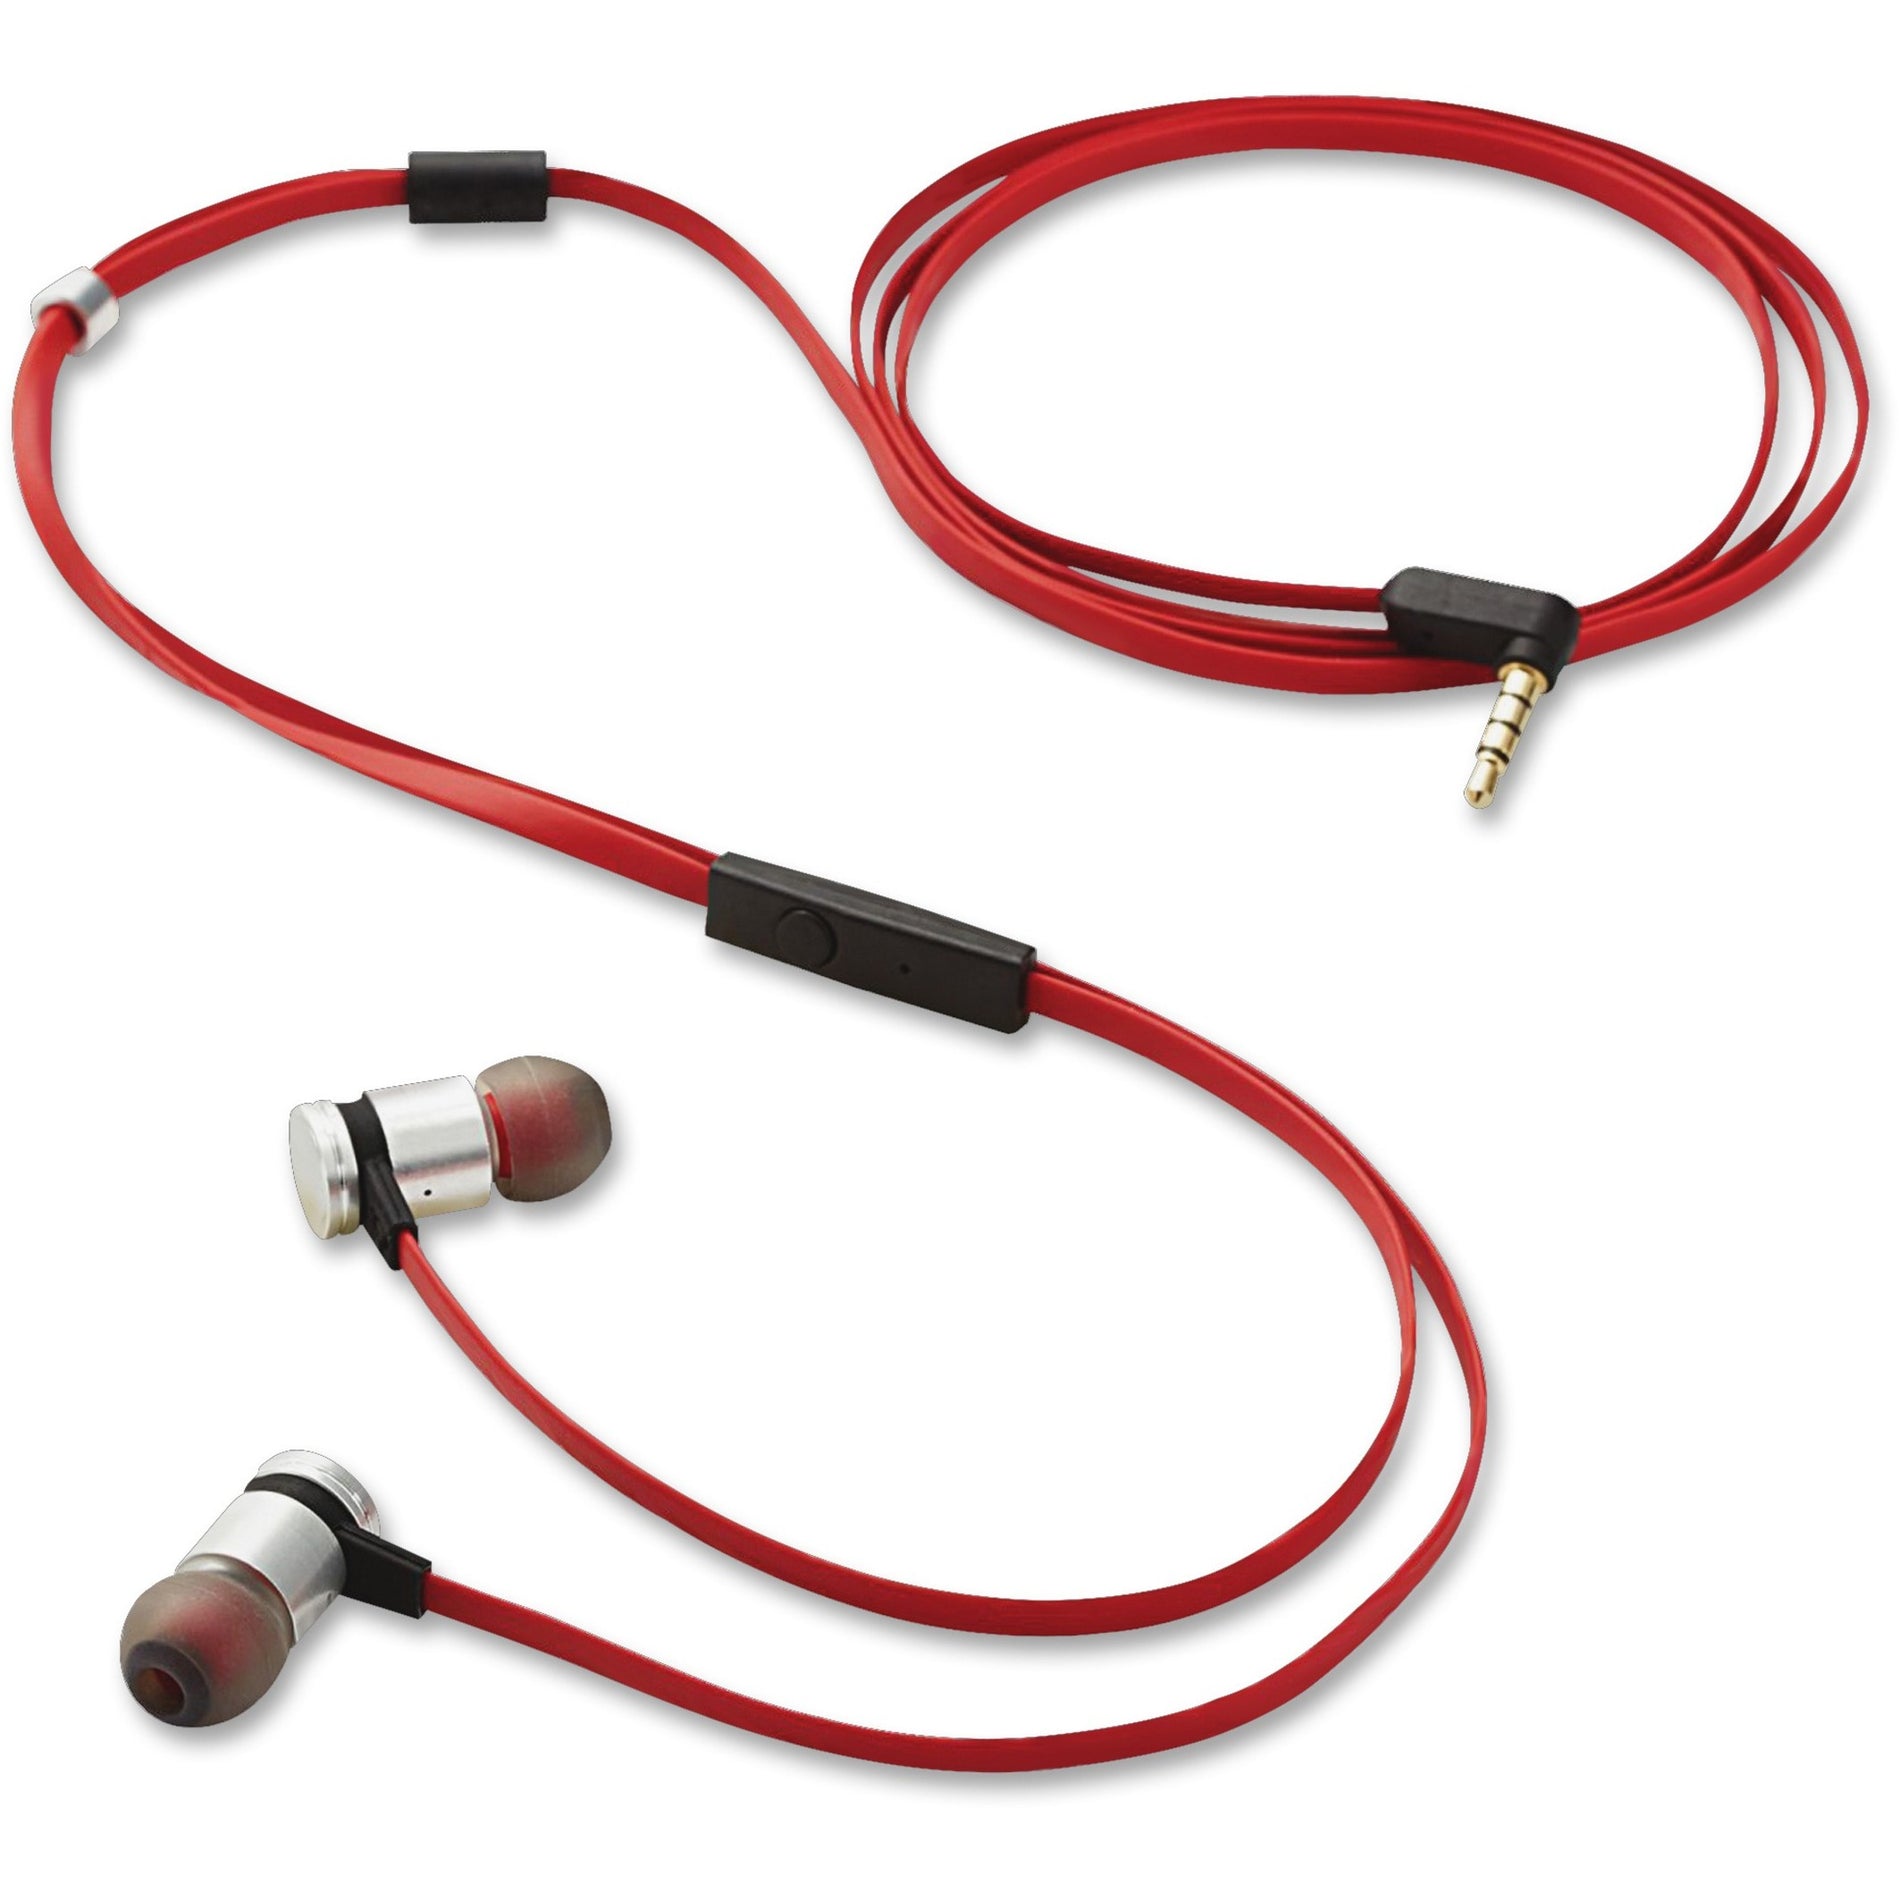 Verbatim 99210 Listen / Talk Earphones, Red/Silver, In-line Remote, Comfortable, Tangle-free Cable